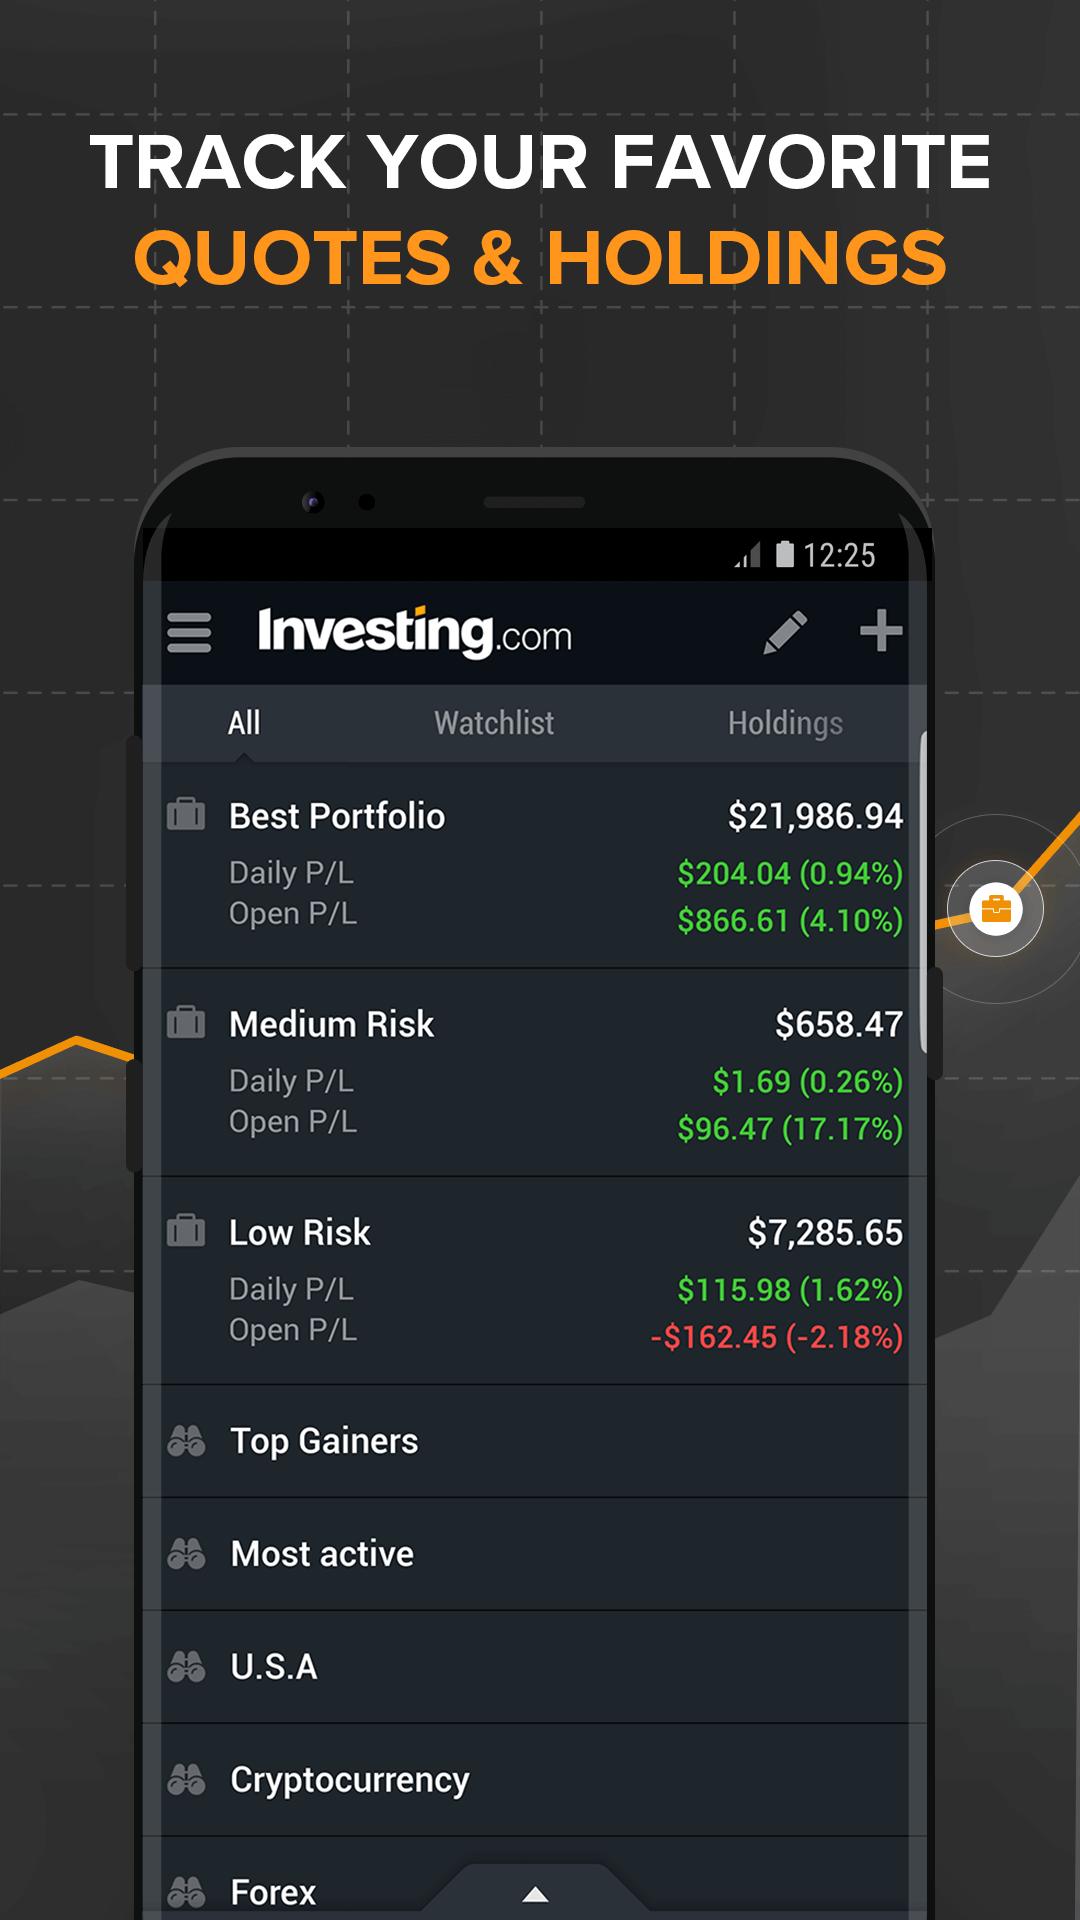 Investing.com: Stocks, Finance, Markets & News 6.6.5 Screenshot 8